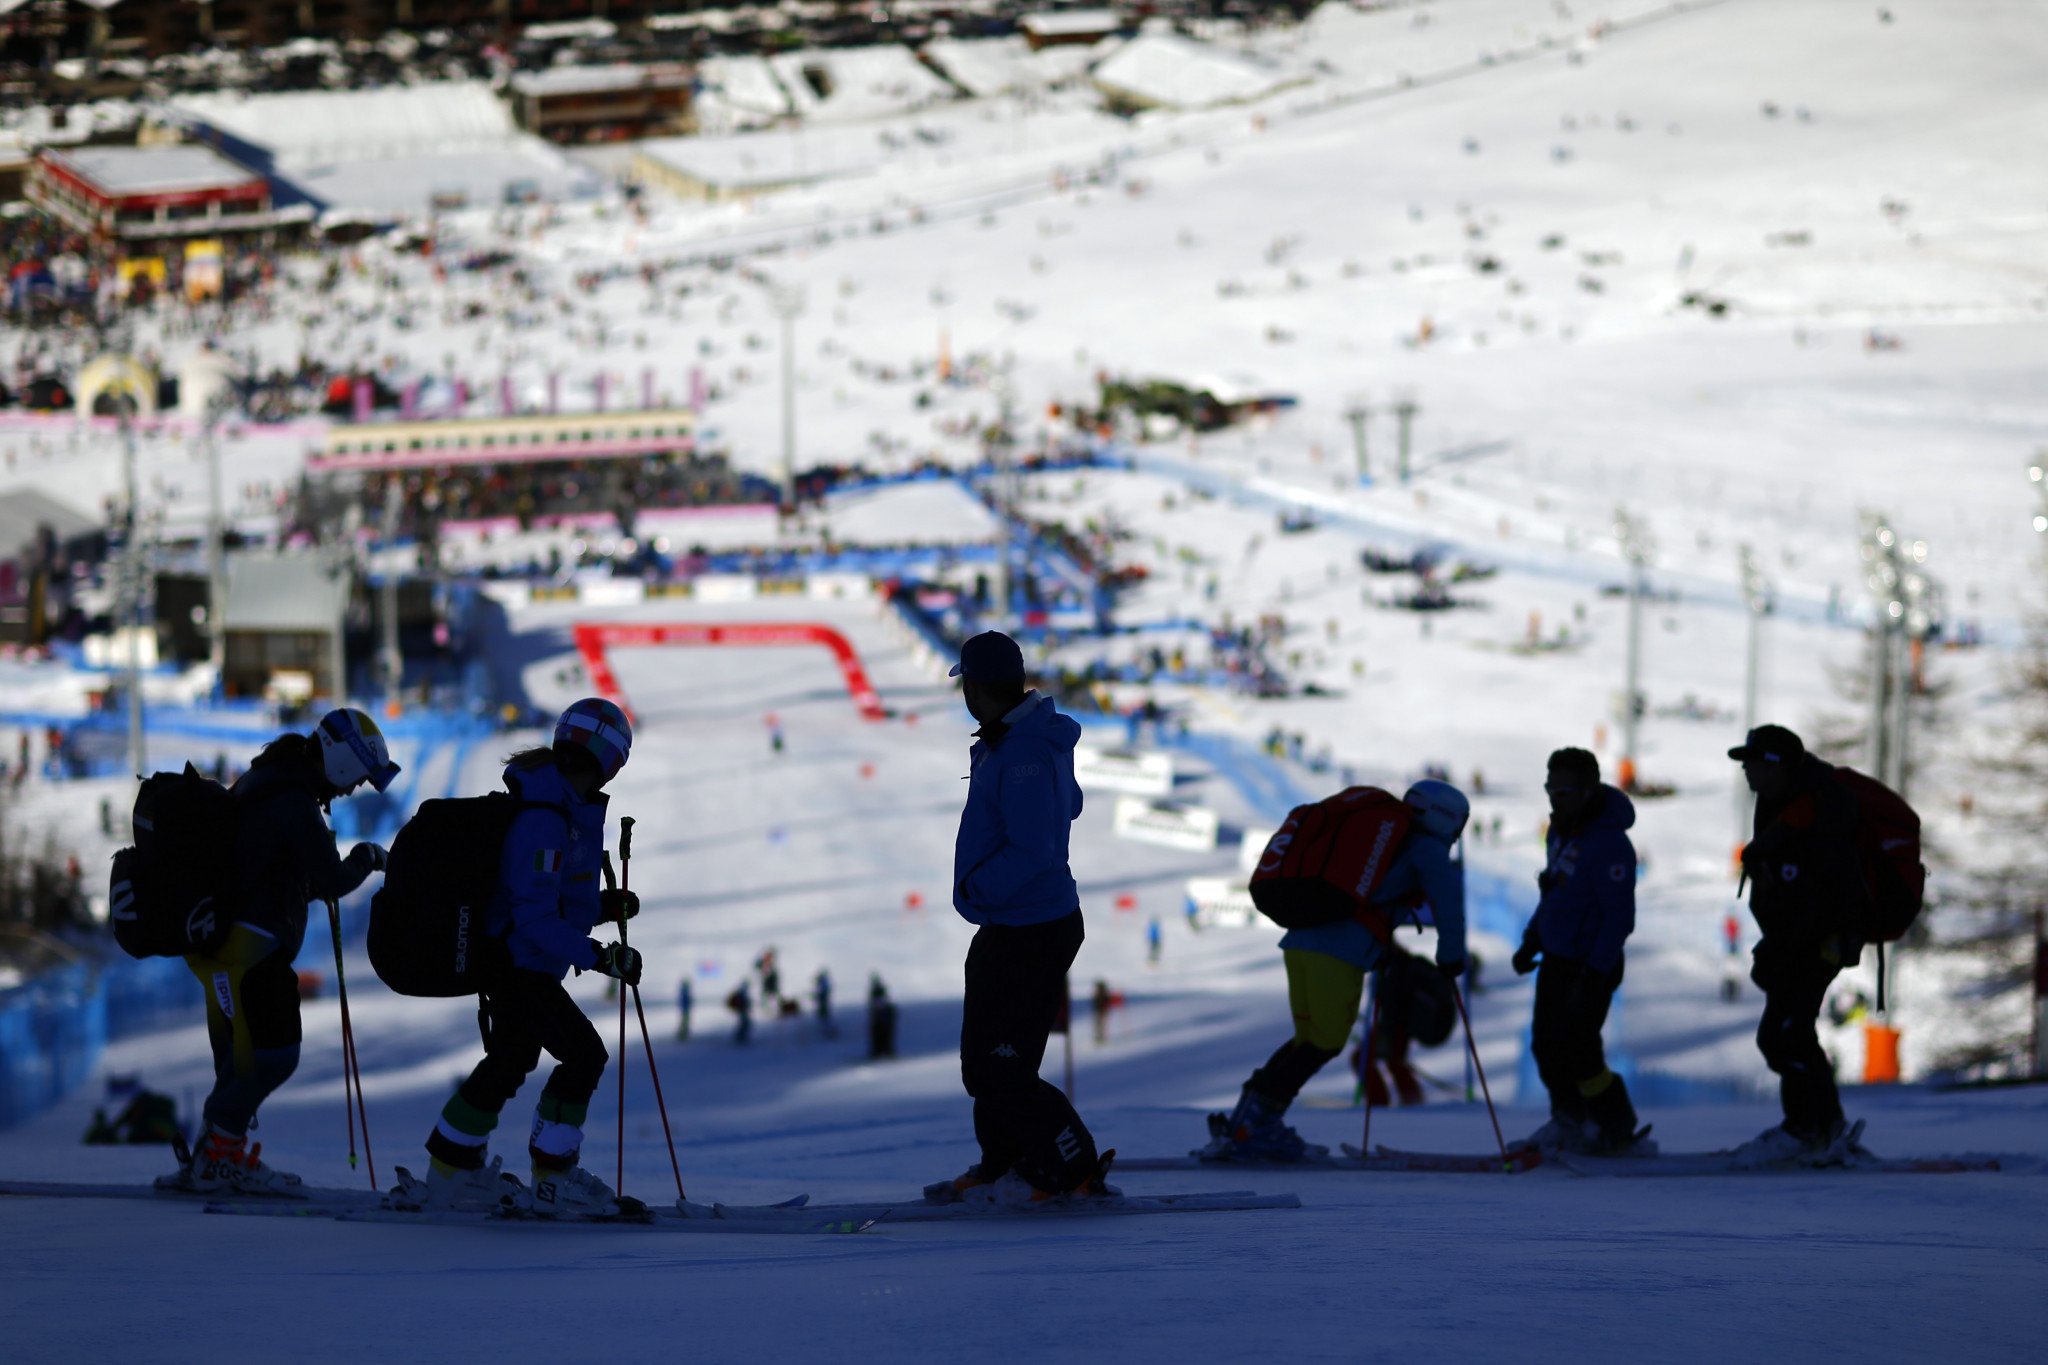 Italian ski resort Sestriere will bid to host the 2029 FIS Alpine World Ski Championships ©Getty Images